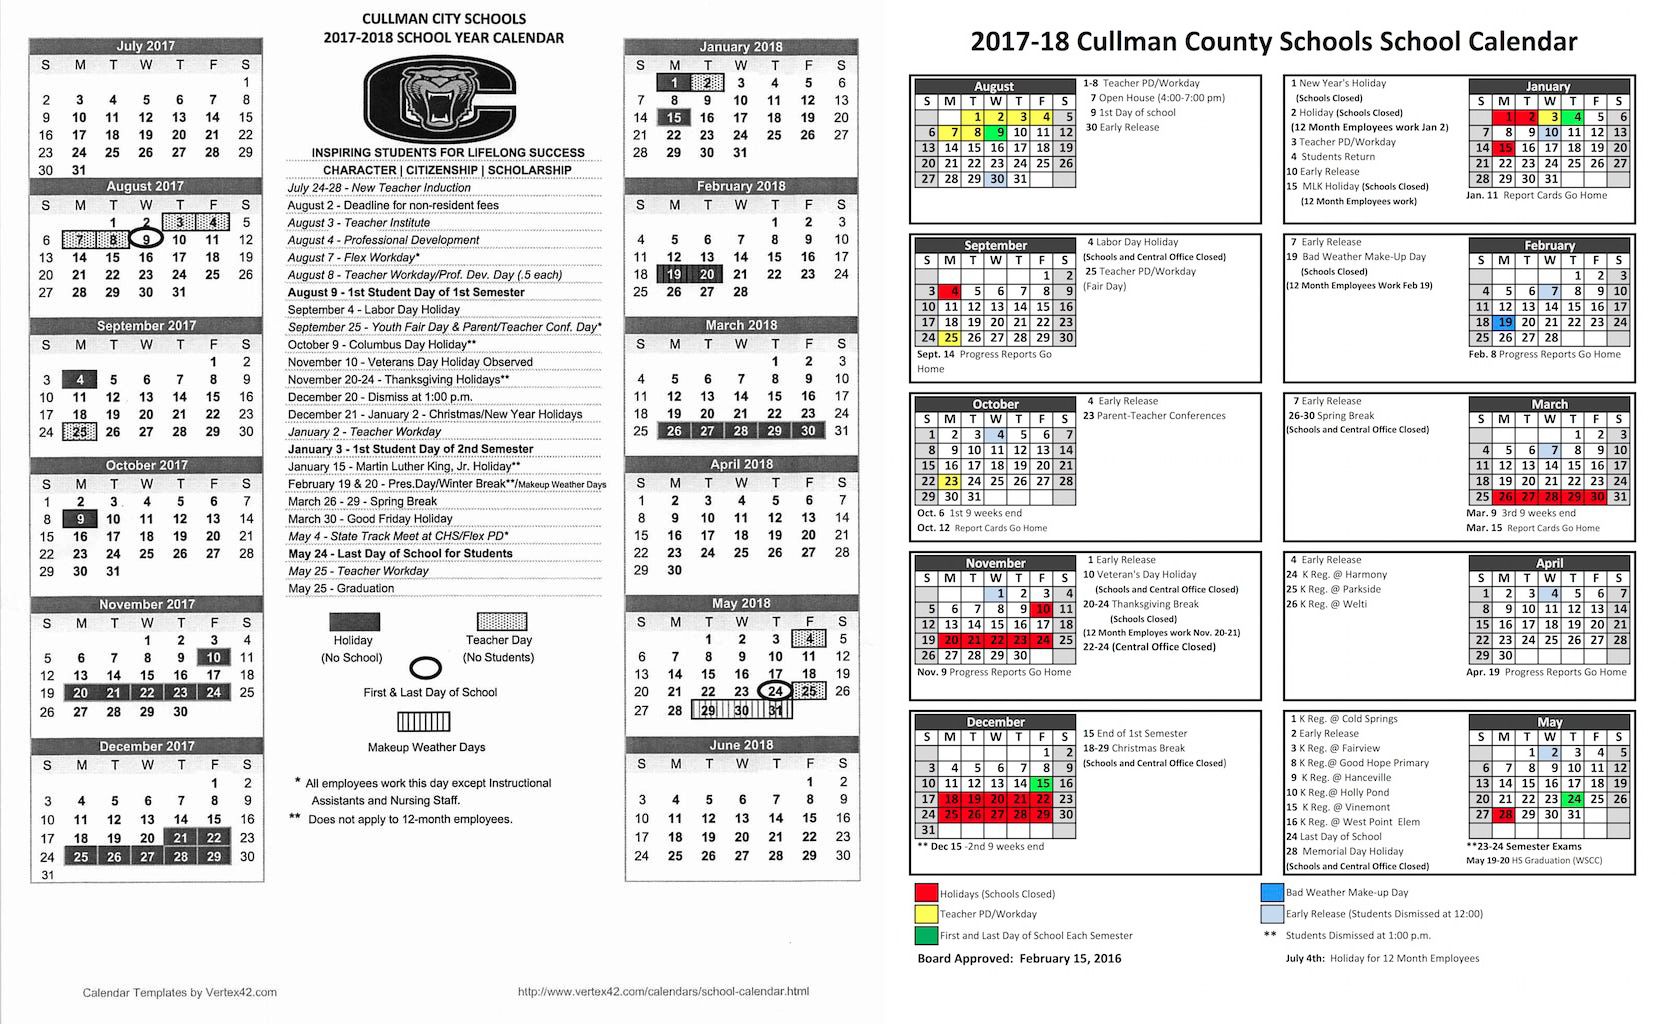 SCHOOL DAYS: 2017-2018 Calendars for Cullman County, City